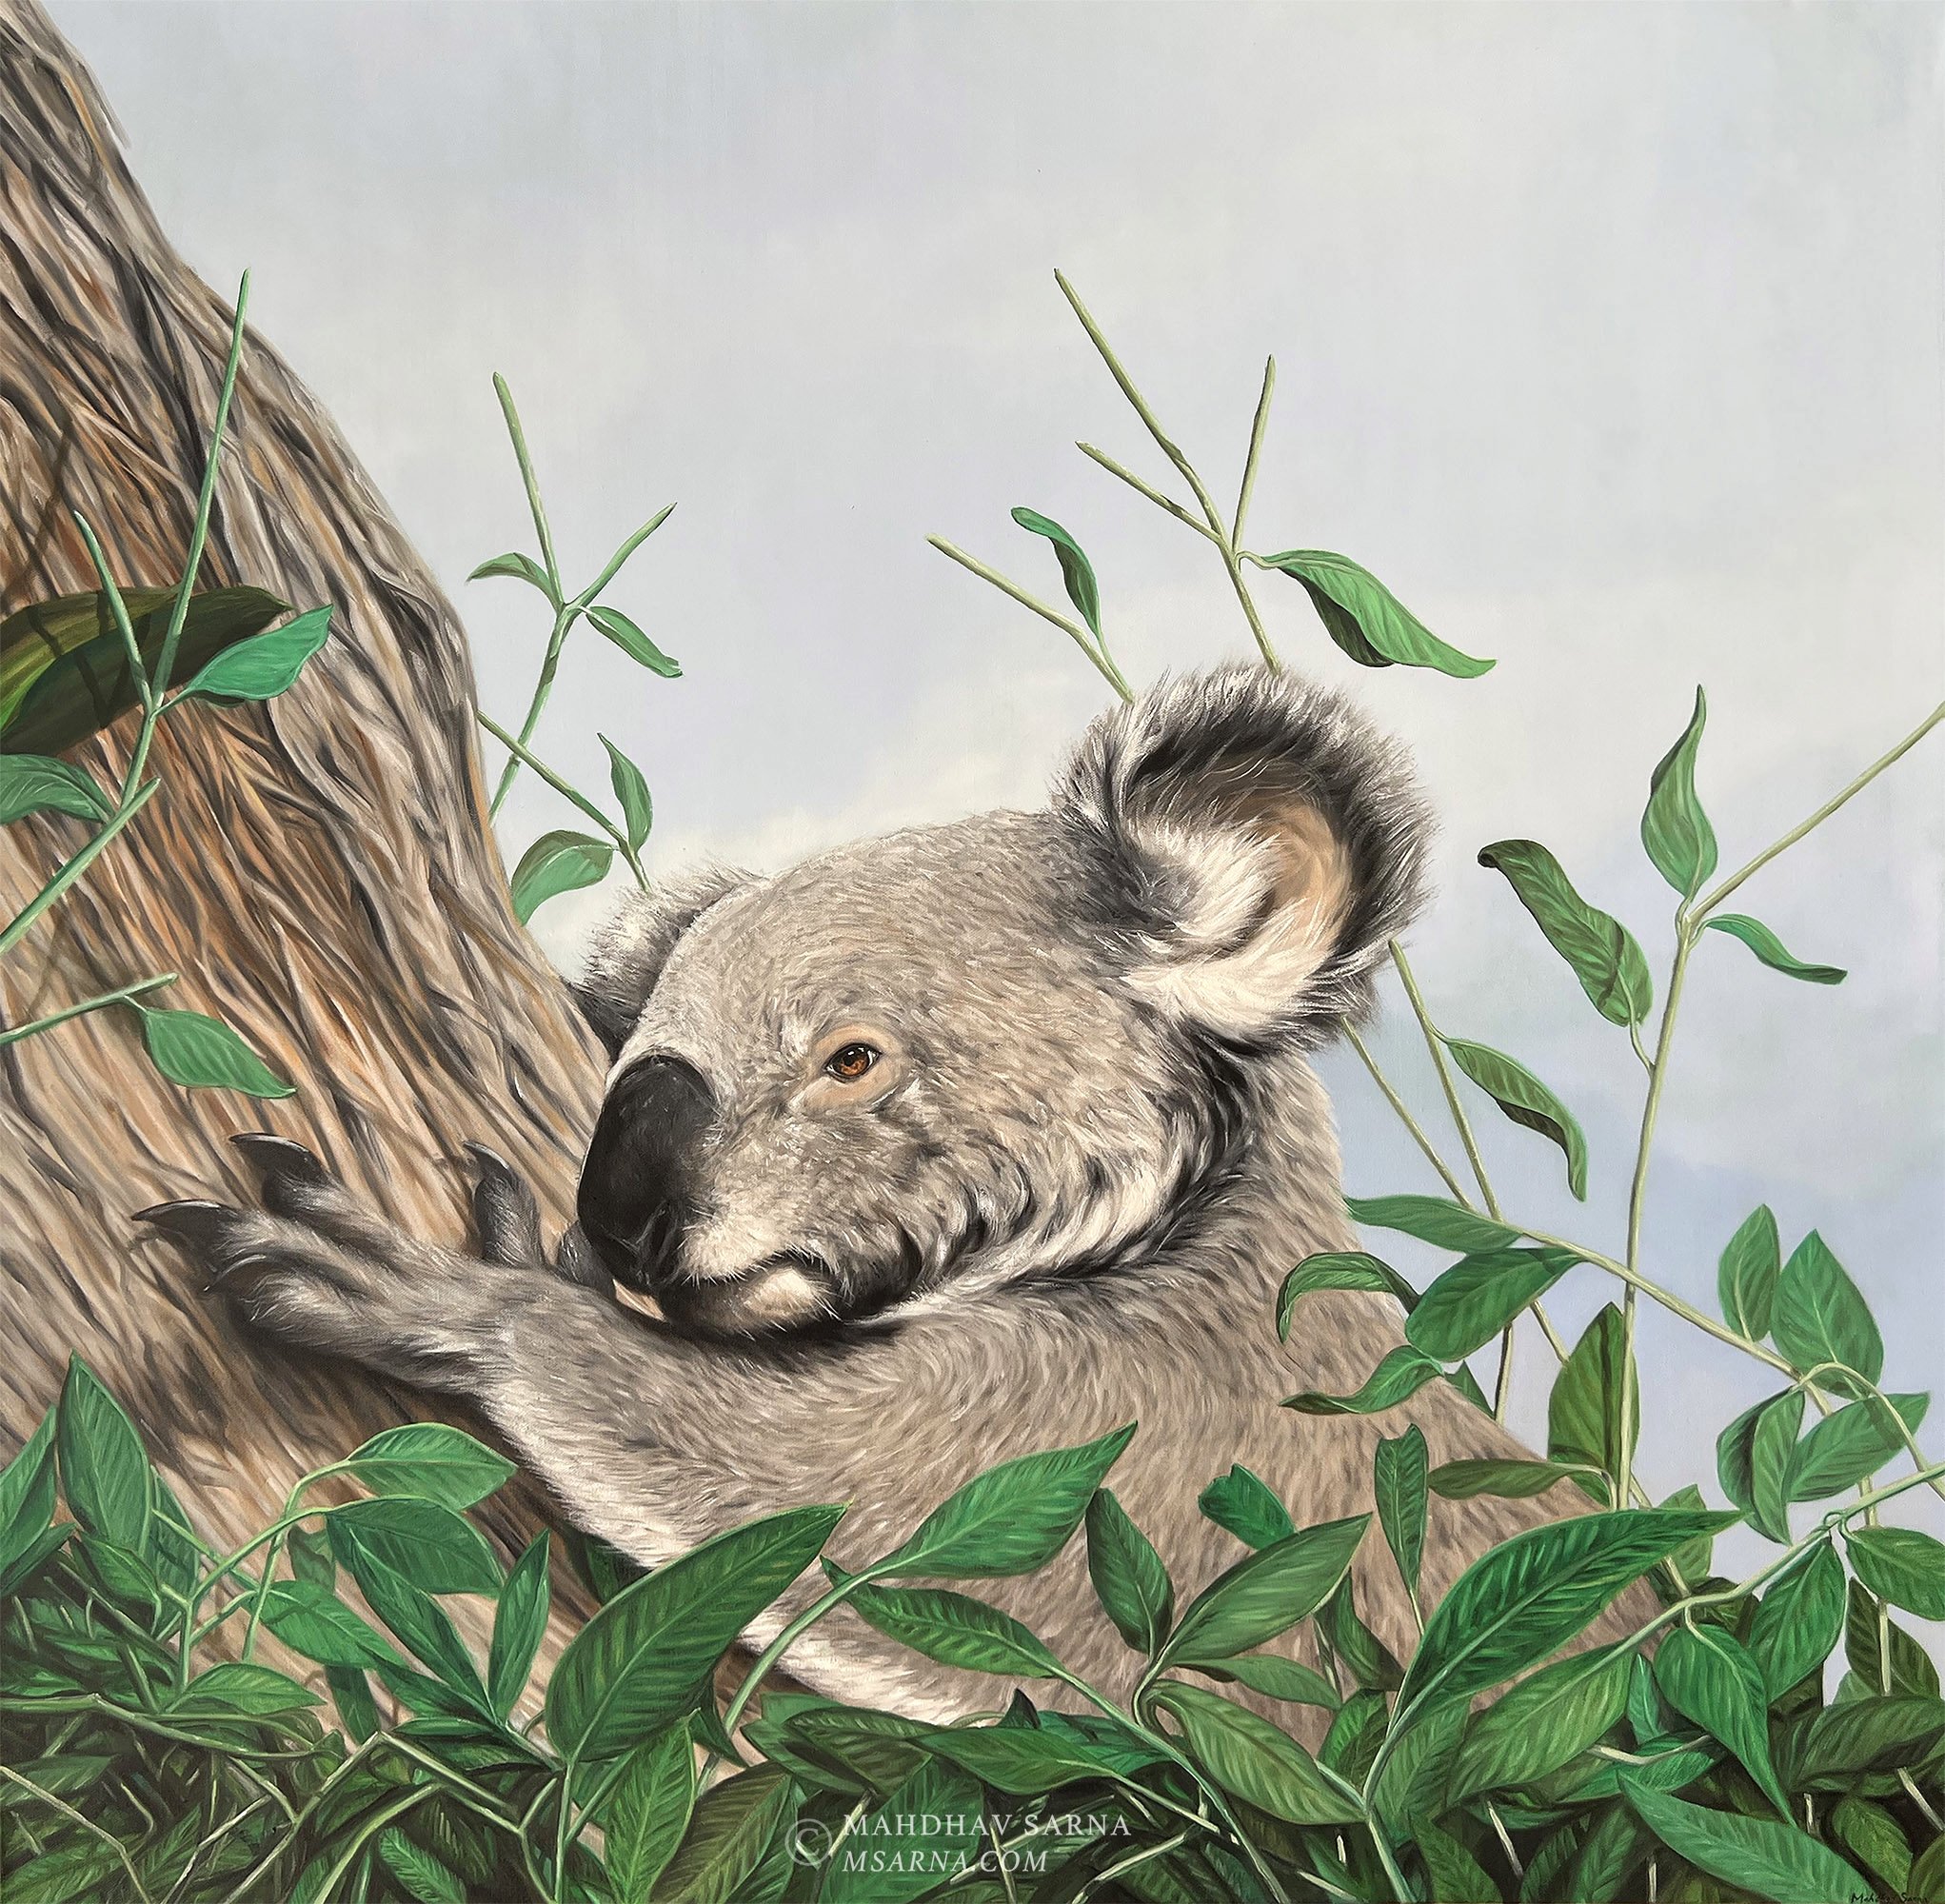 koala oil painting llfe wildlife art mahdhav sarna 02.jpg